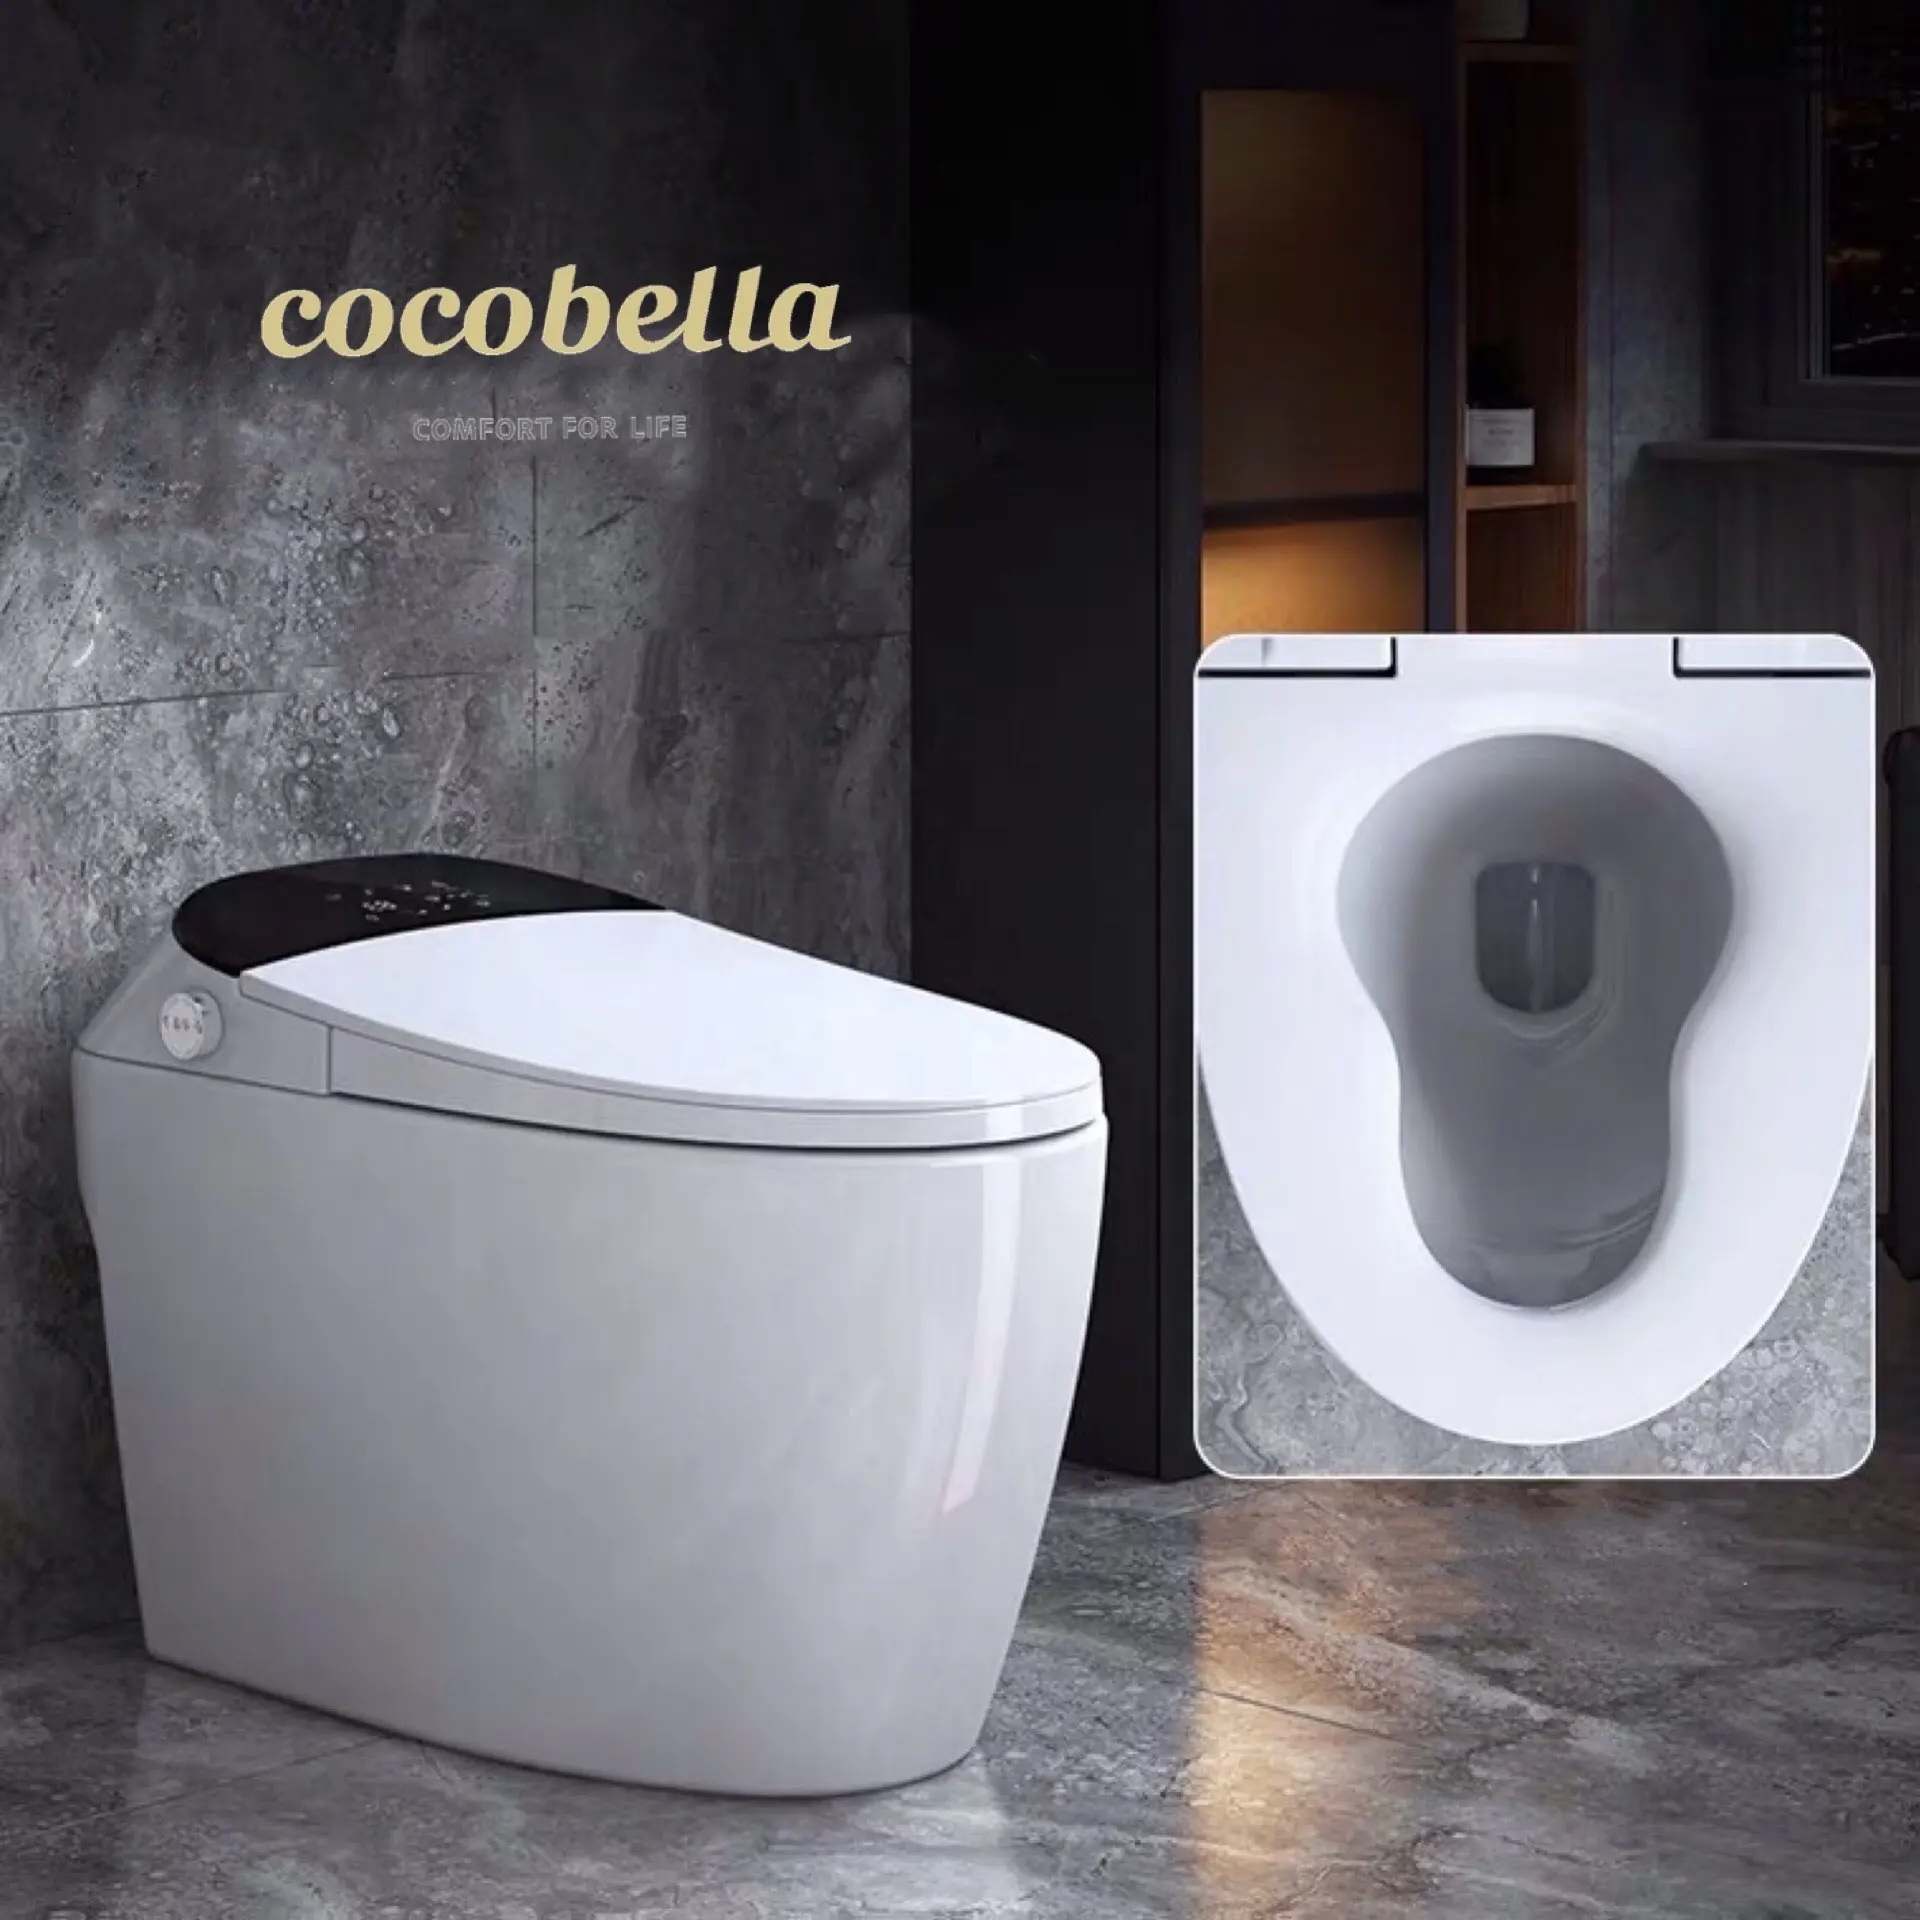 COCOBELLA 유럽 스타일 스마트 지능형 화장실 원피스 비데 스마트 화장실 호텔